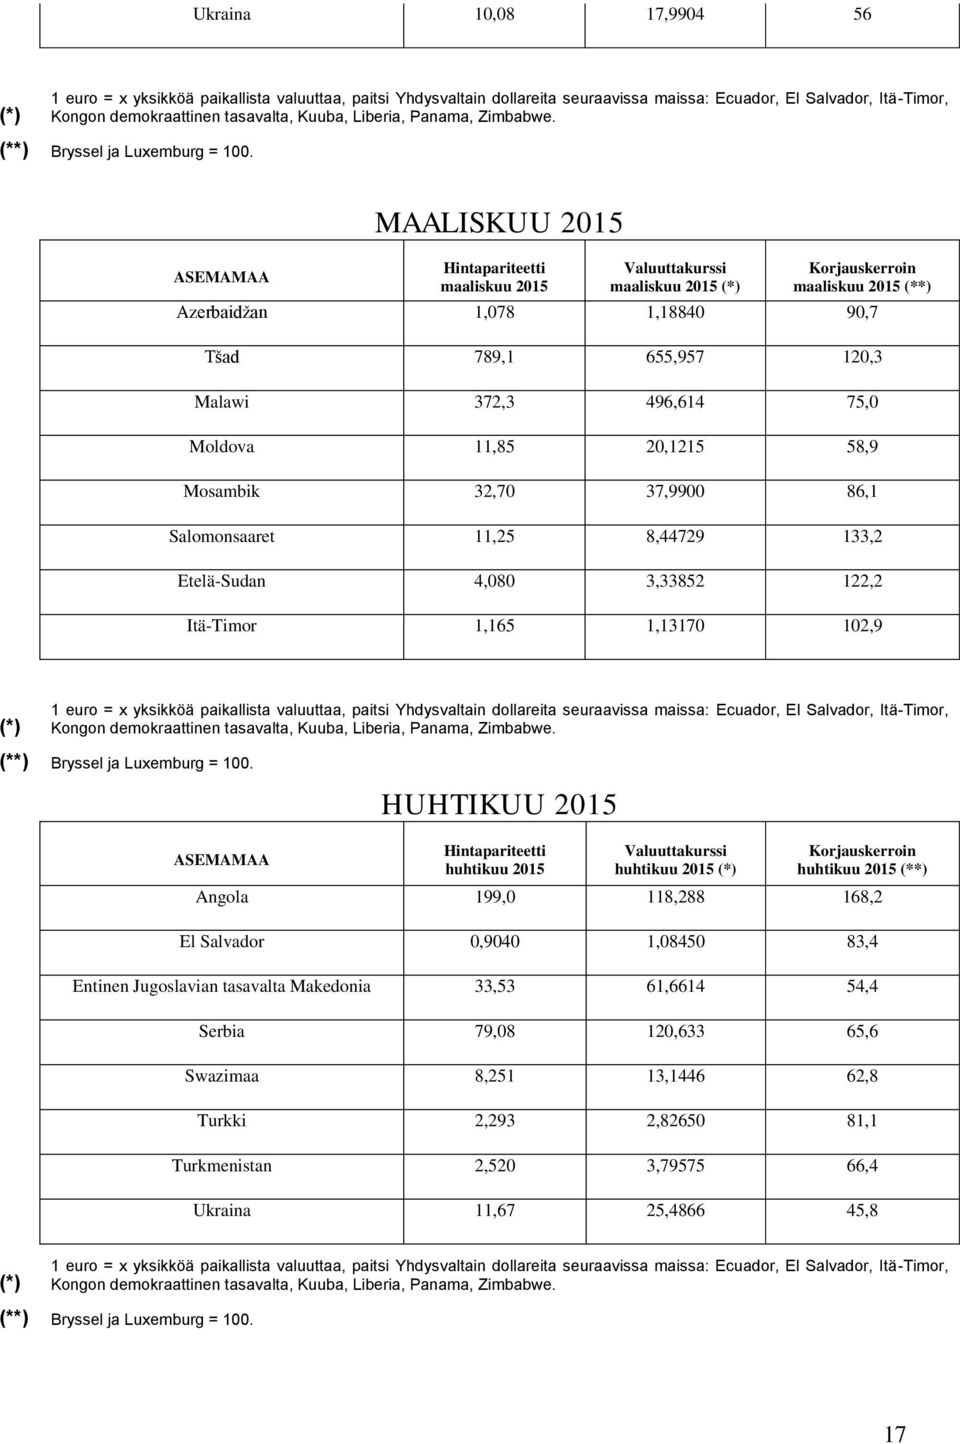 ASEMAMAA MAALISKUU 2015 maaliskuu 2015 maaliskuu 2015 (*) maaliskuu 2015 (**) Azerbaidžan 1,078 1,18840 90,7 Tšad 789,1 655,957 120,3 Malawi 372,3 496,614 75,0 Moldova 11,85 20,1215 58,9 Mosambik